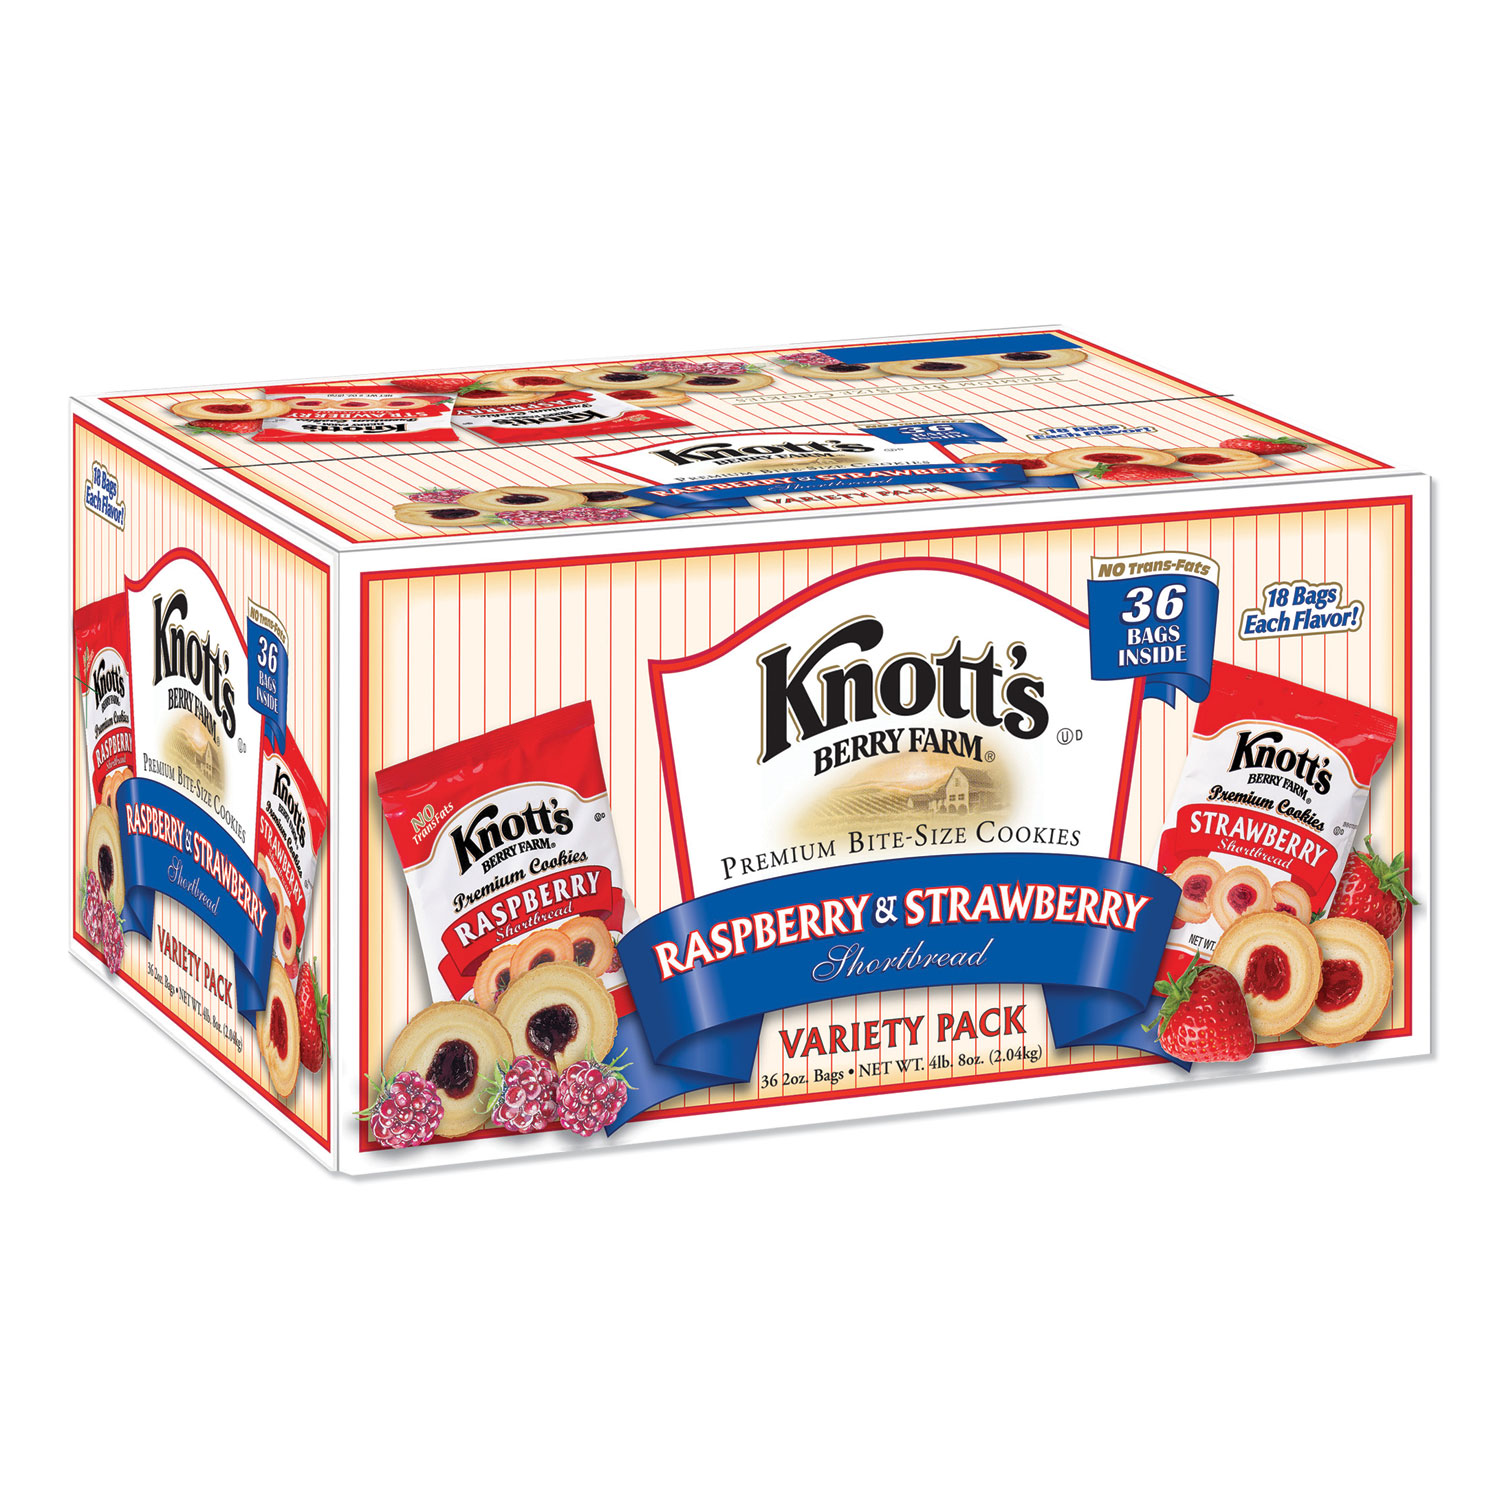 Knotts Berry Farm® Premium Berry Jam Shortbread Cookies, Raspberry and Strawberry Variety, 2 oz Pack, 36 Packs/Carton